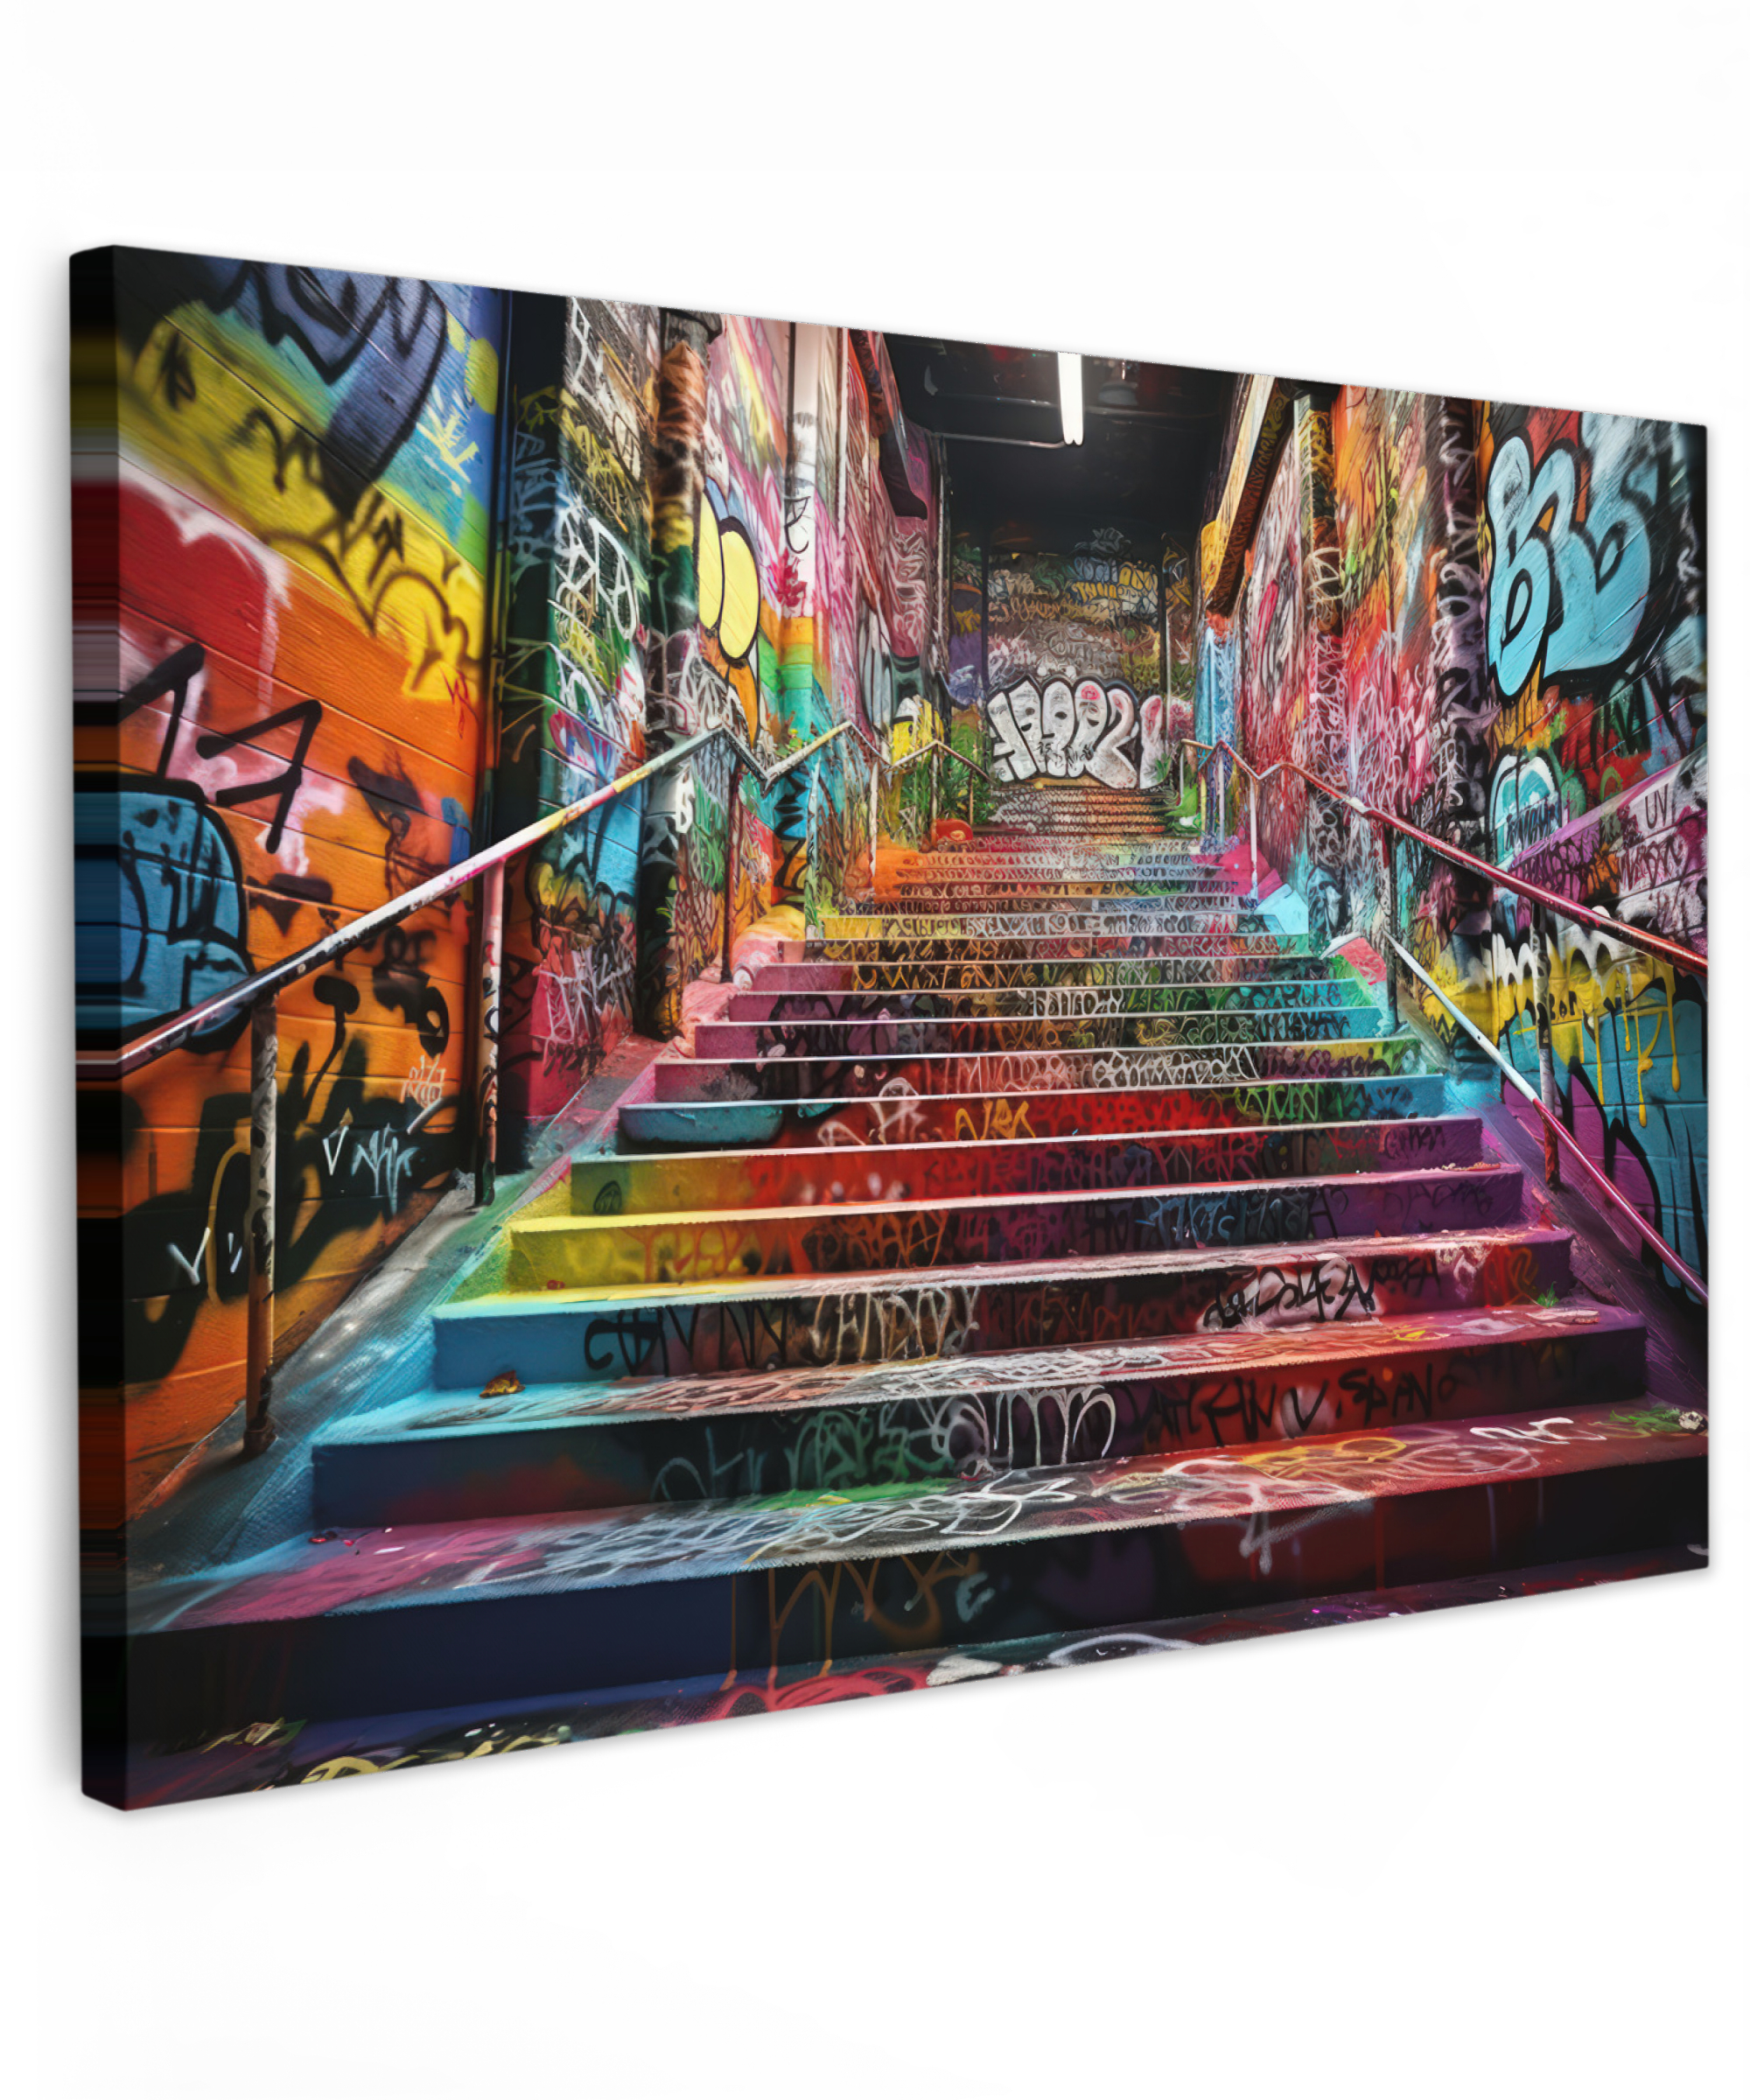 Canvas schilderij - Trap - Graffiti - Kleuren - Kunst